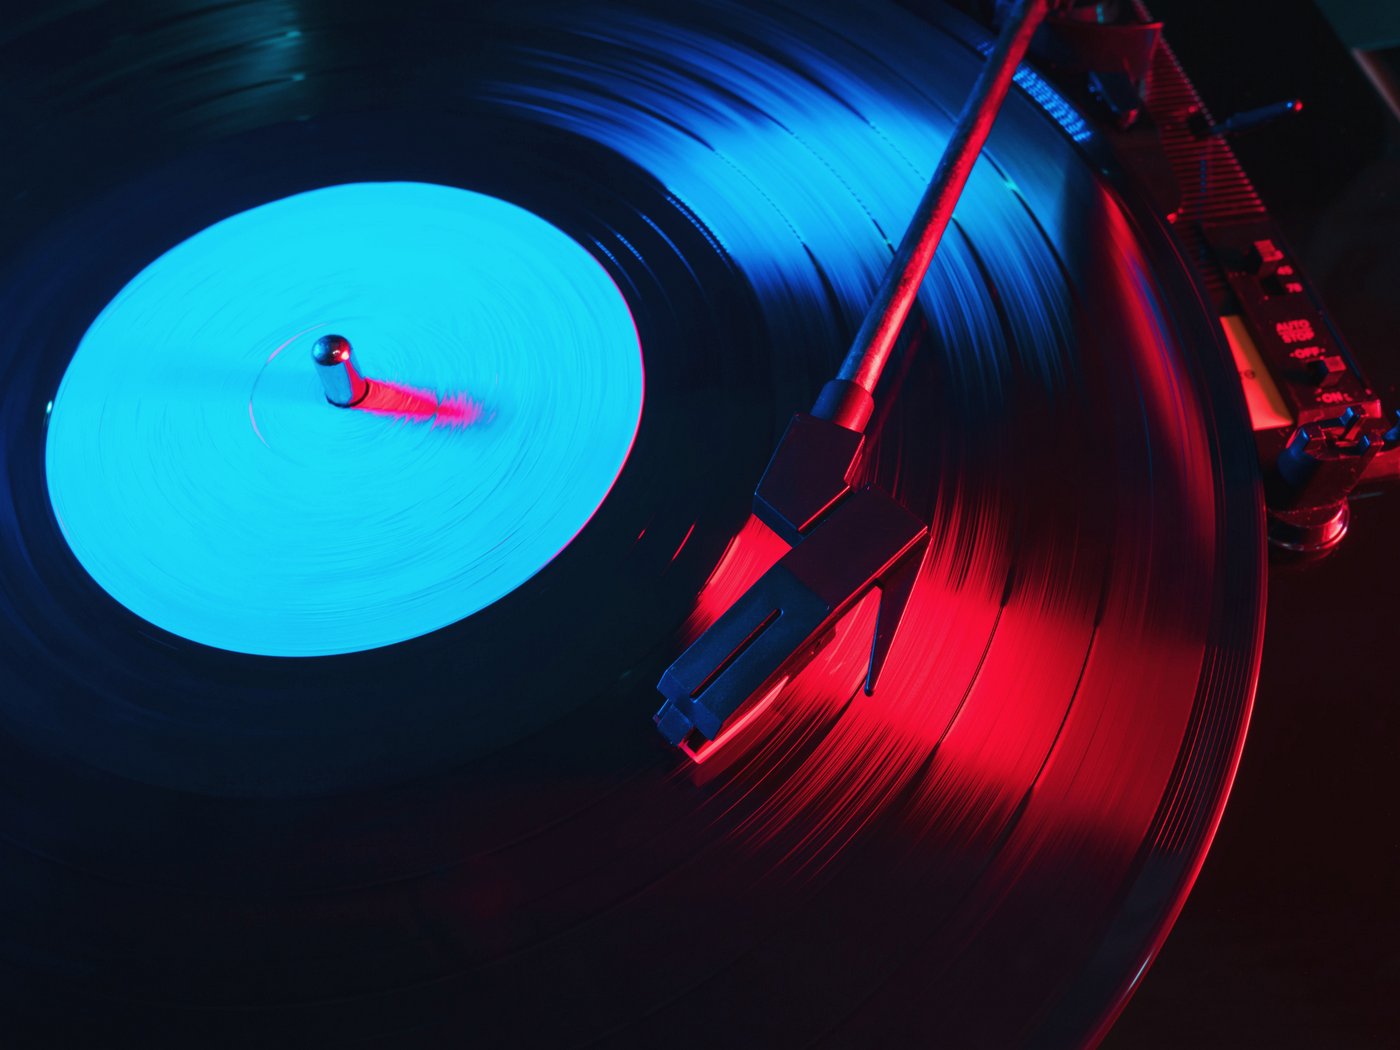 Retro record player - how to convert vinyl to digital